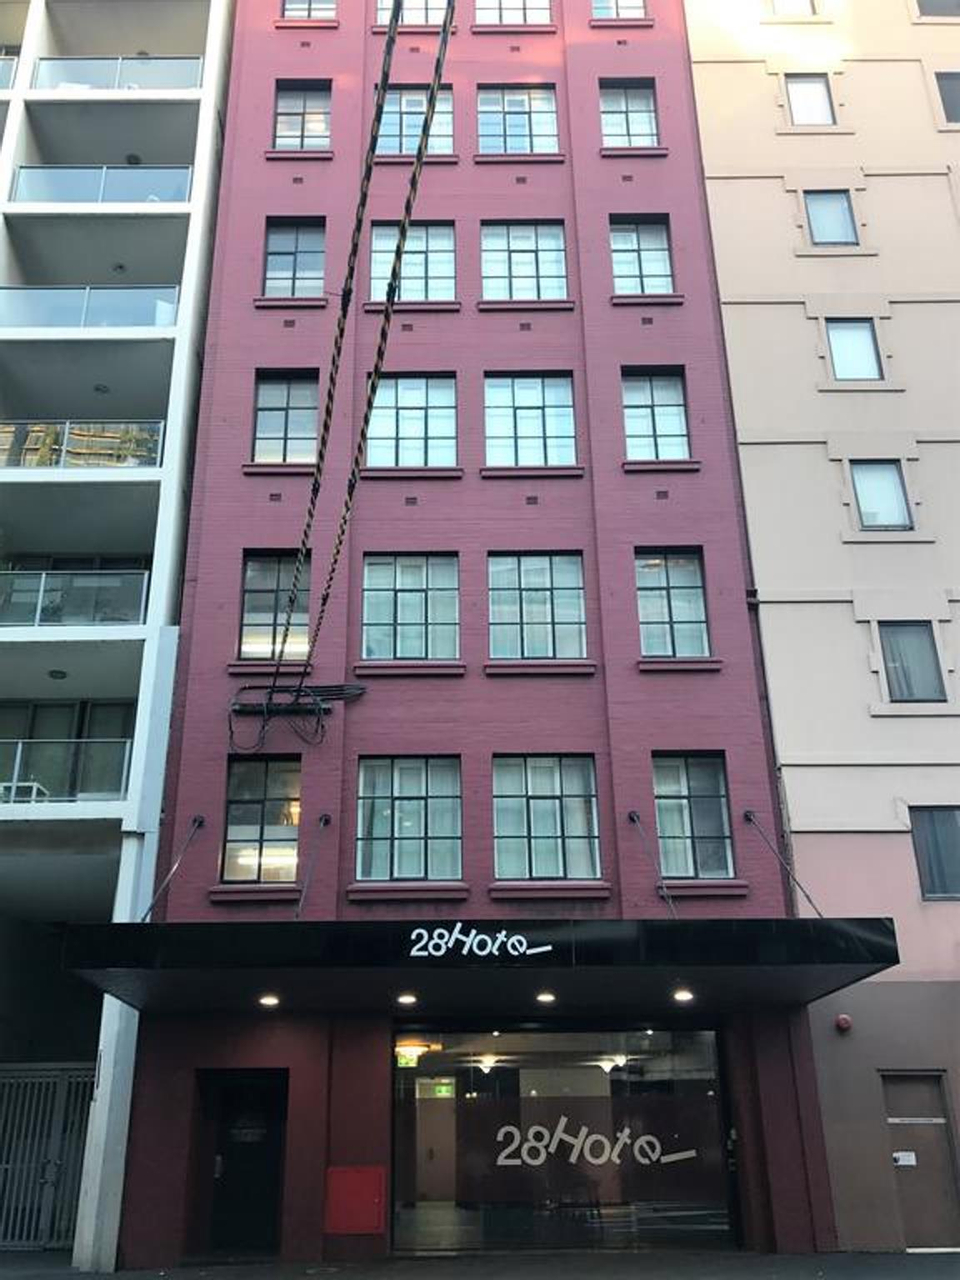 Exterior & Views 1, 28 Hotel, Sydney